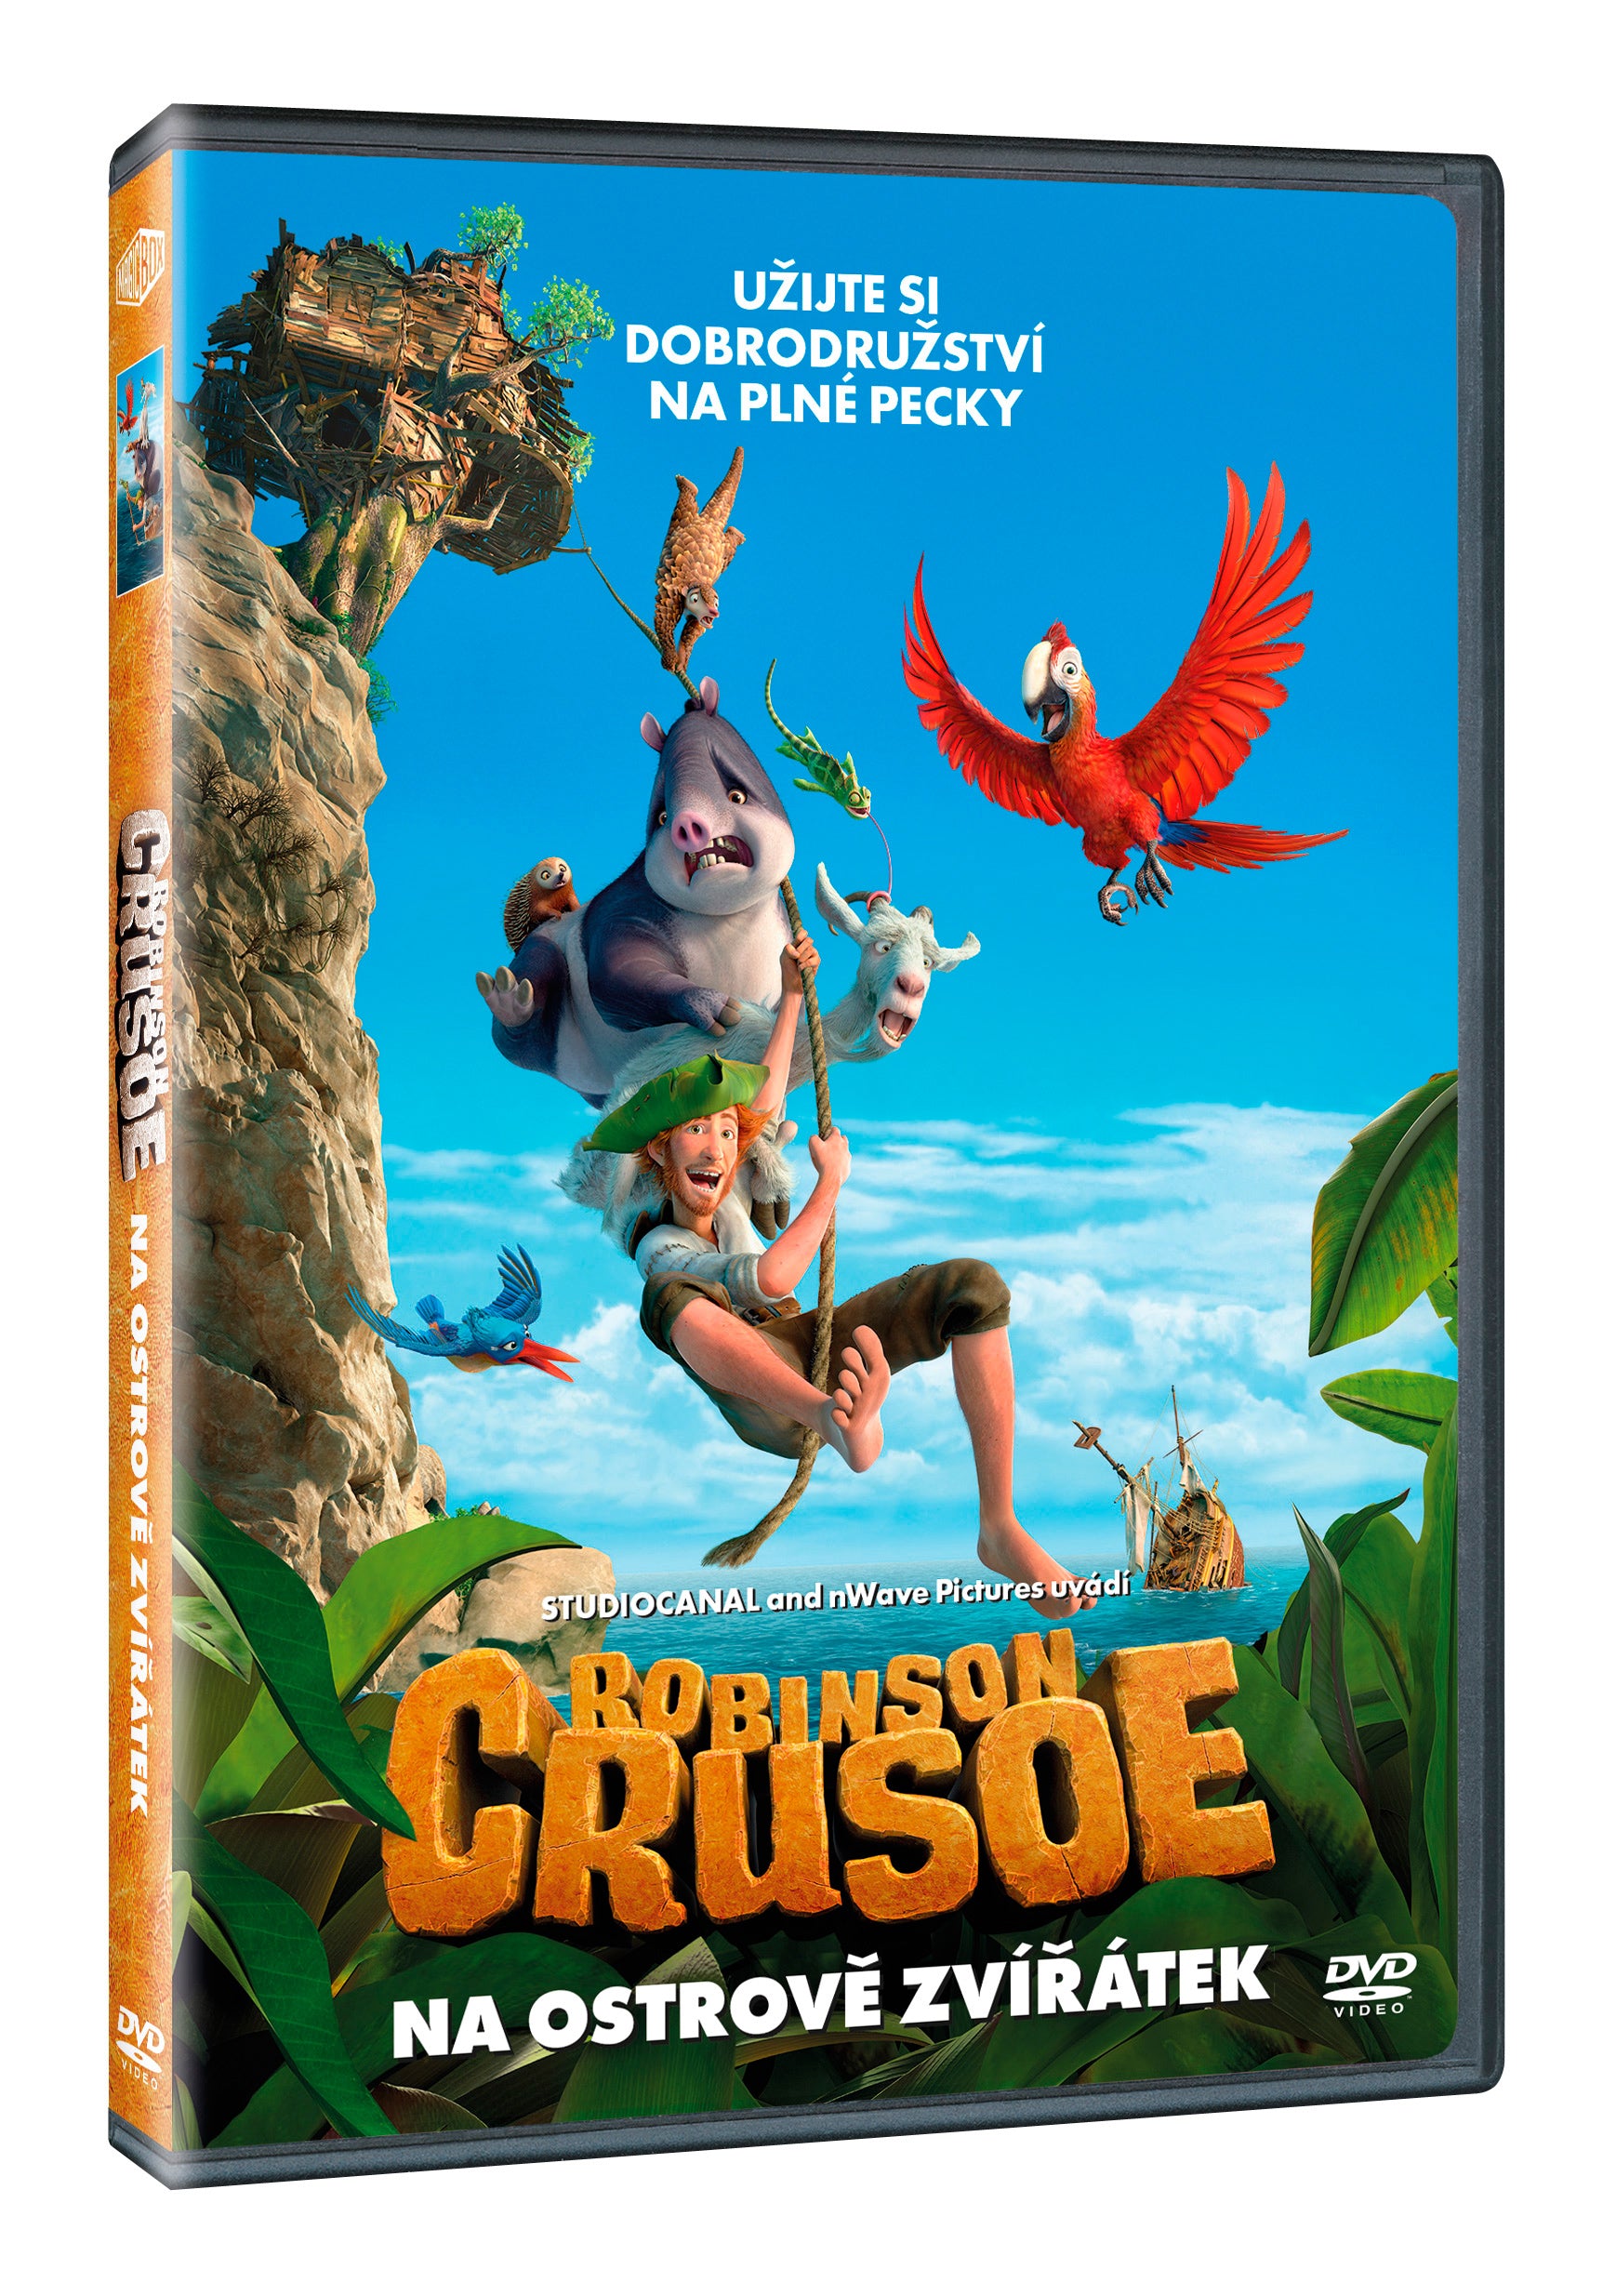 Robinson Crusoe: Na ostrove zviratek DVD / Robinson